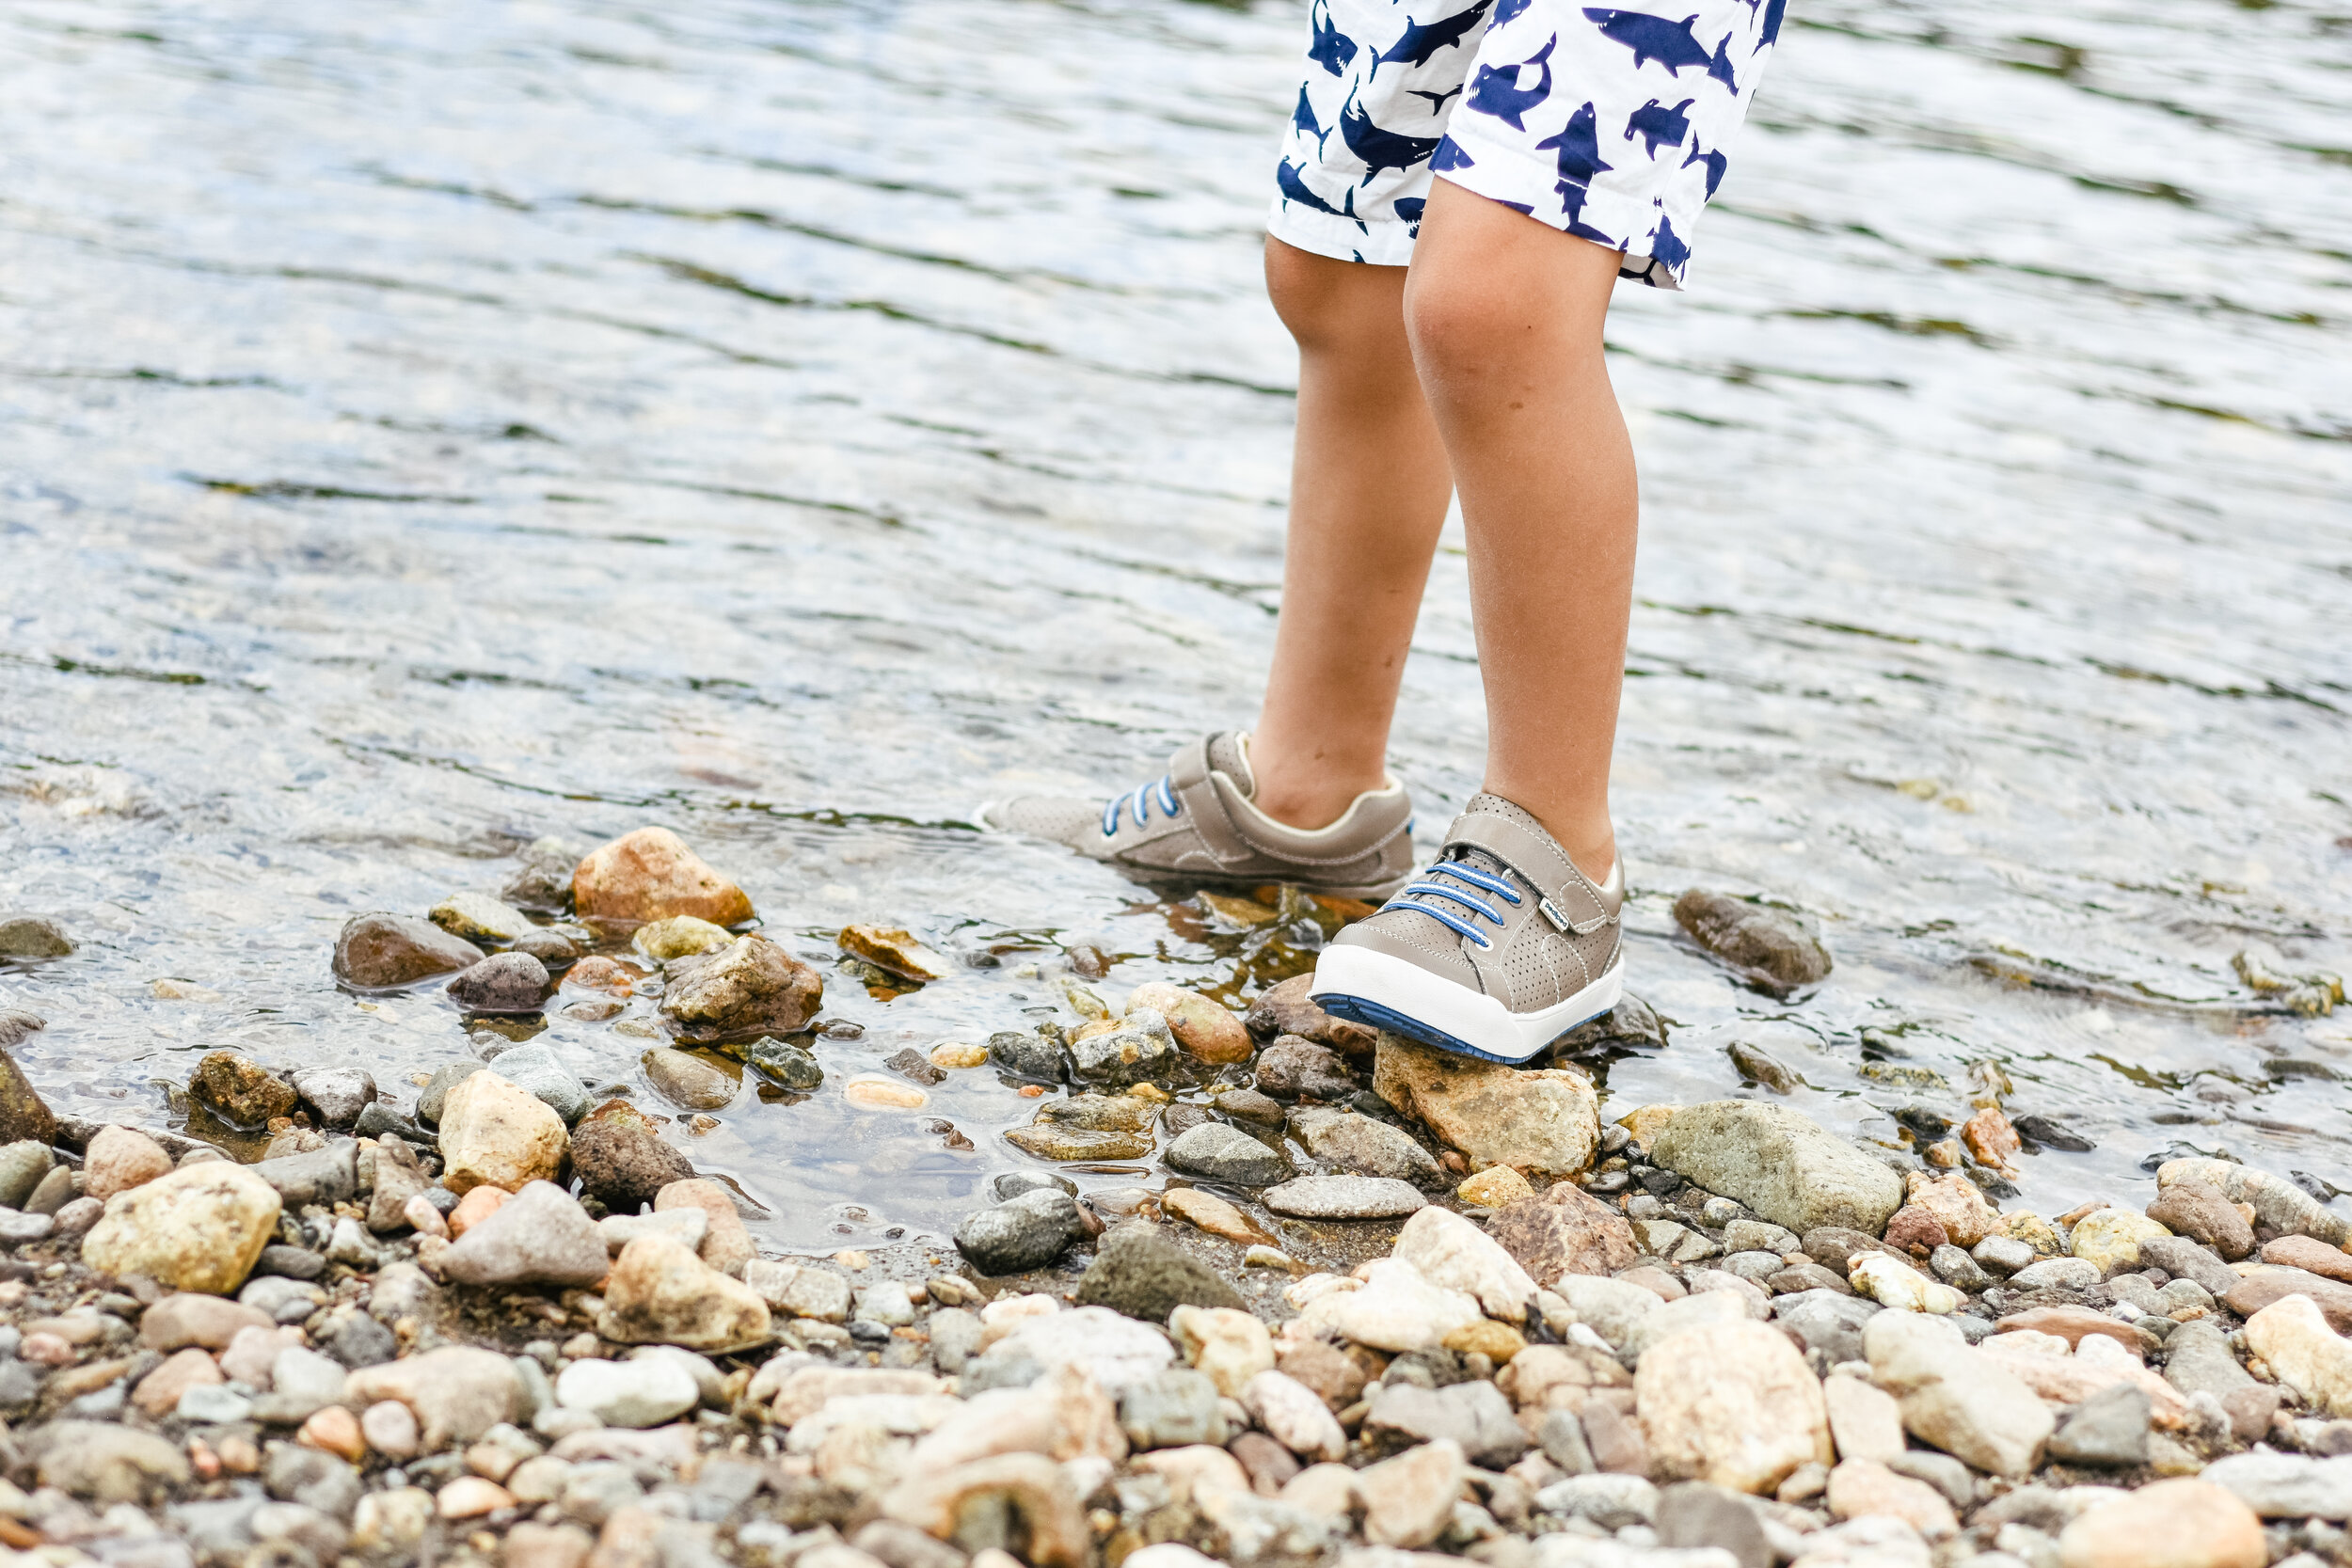 Kids Shoes  Promotes Healthy Foot Development